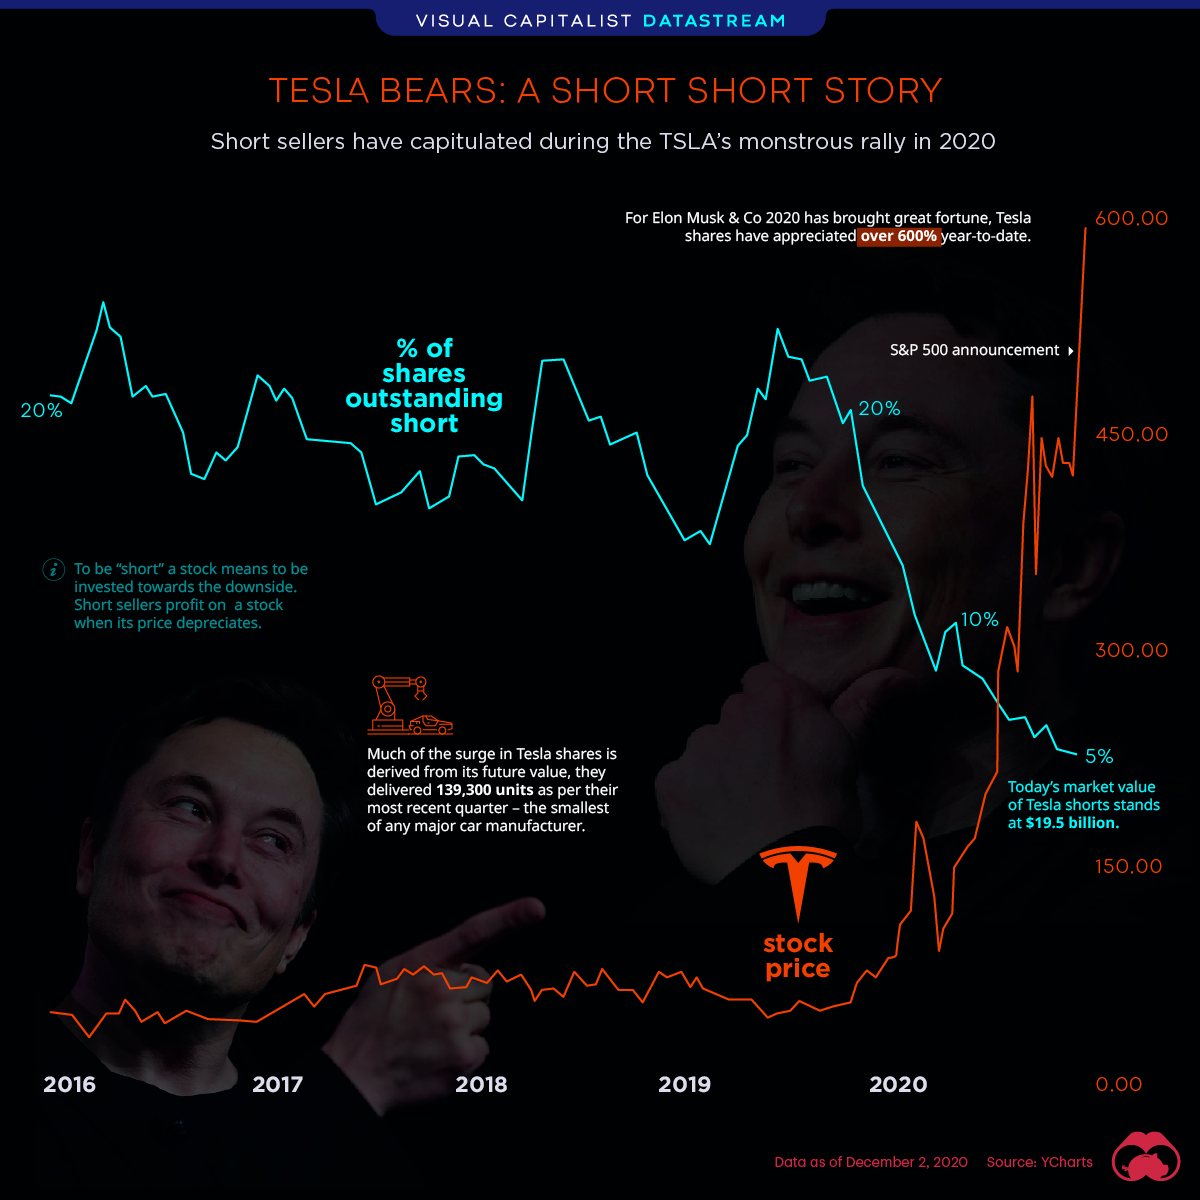 Tesla Bears: A Short Short Story